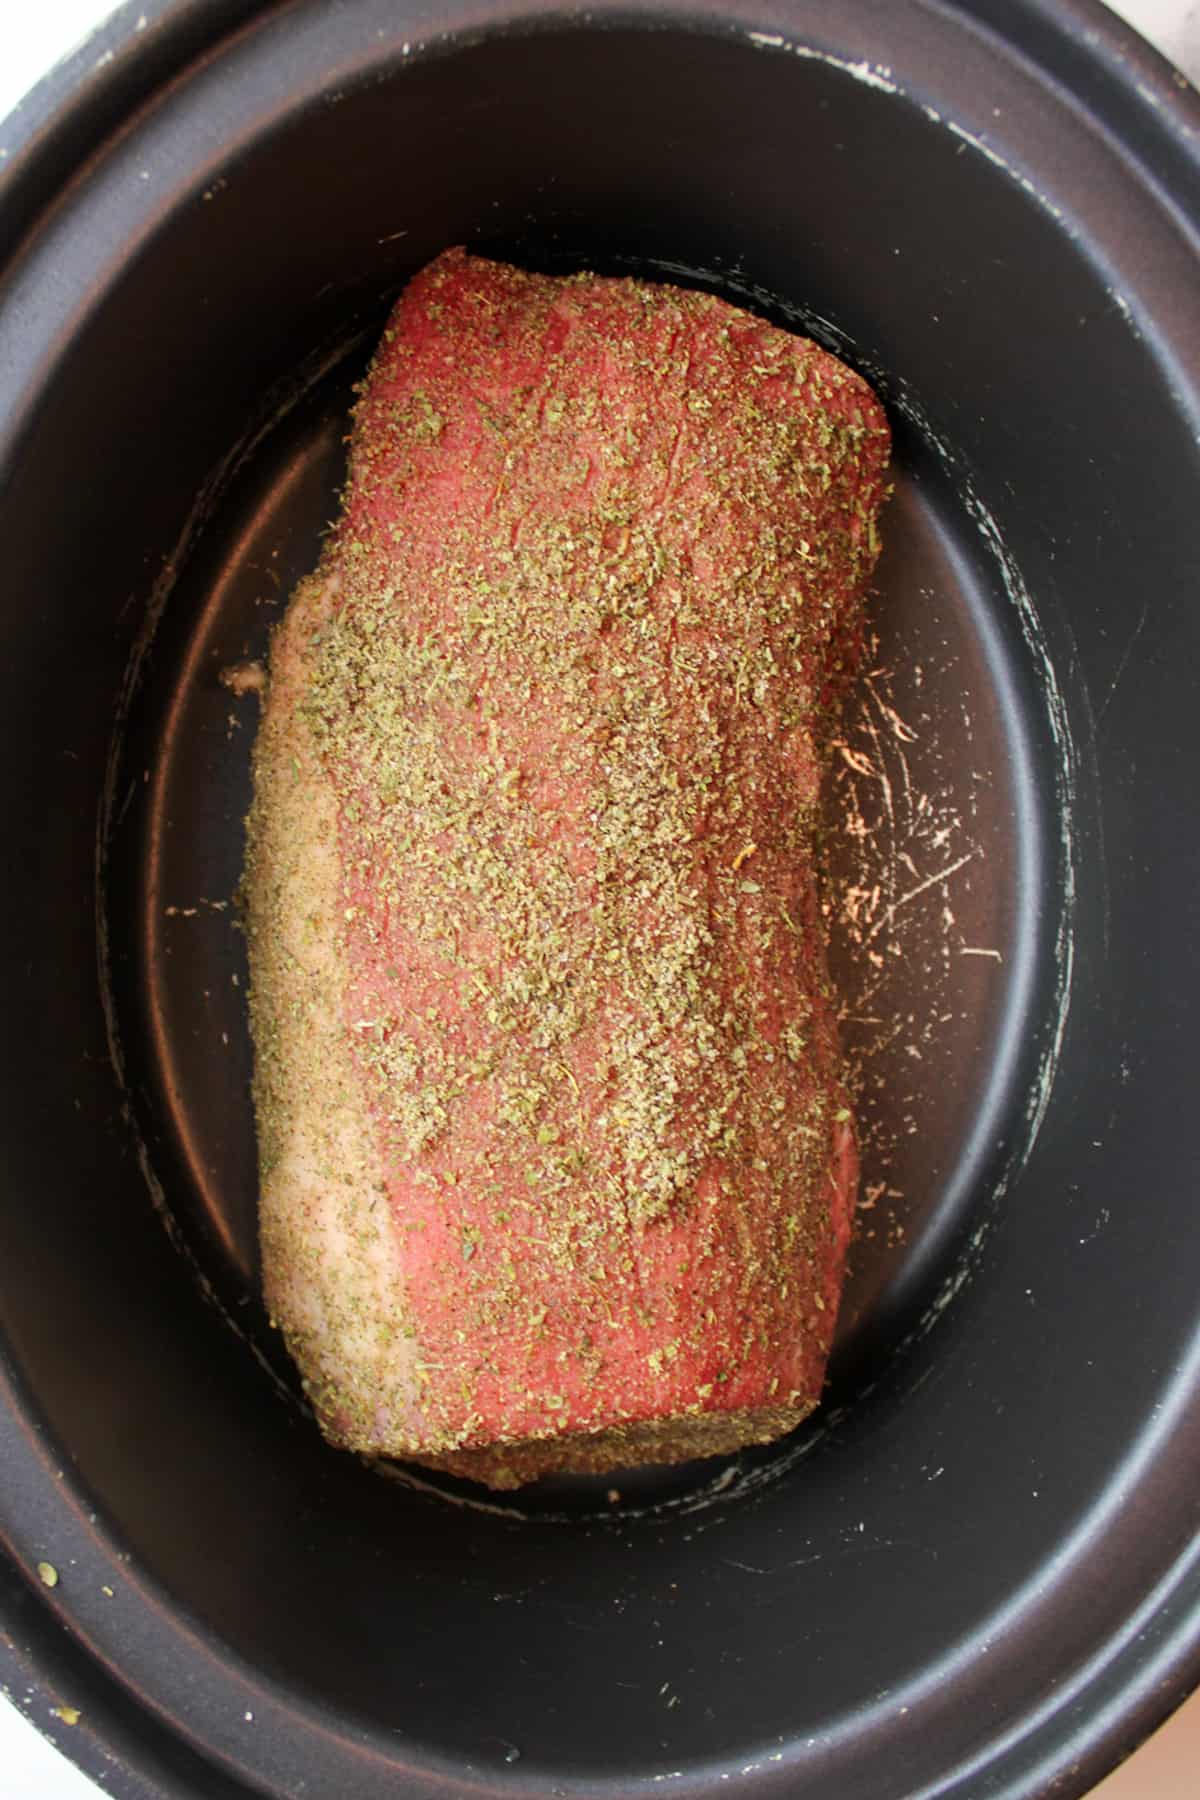 seasoning coated raw beef roast in crock pot